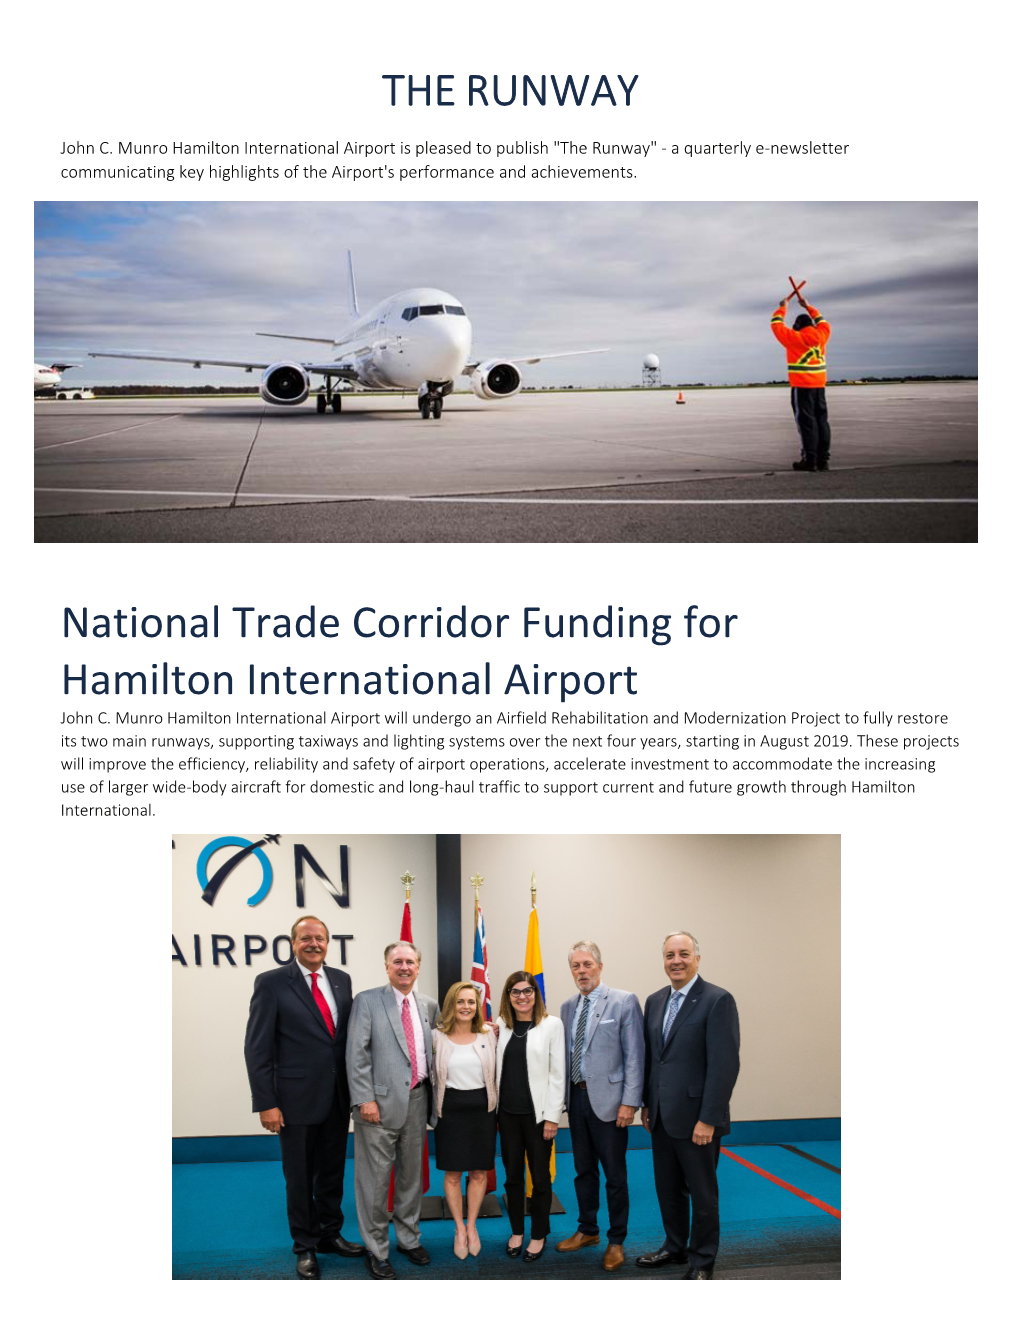 National Trade Corridor Funding for Hamilton International Airport John C